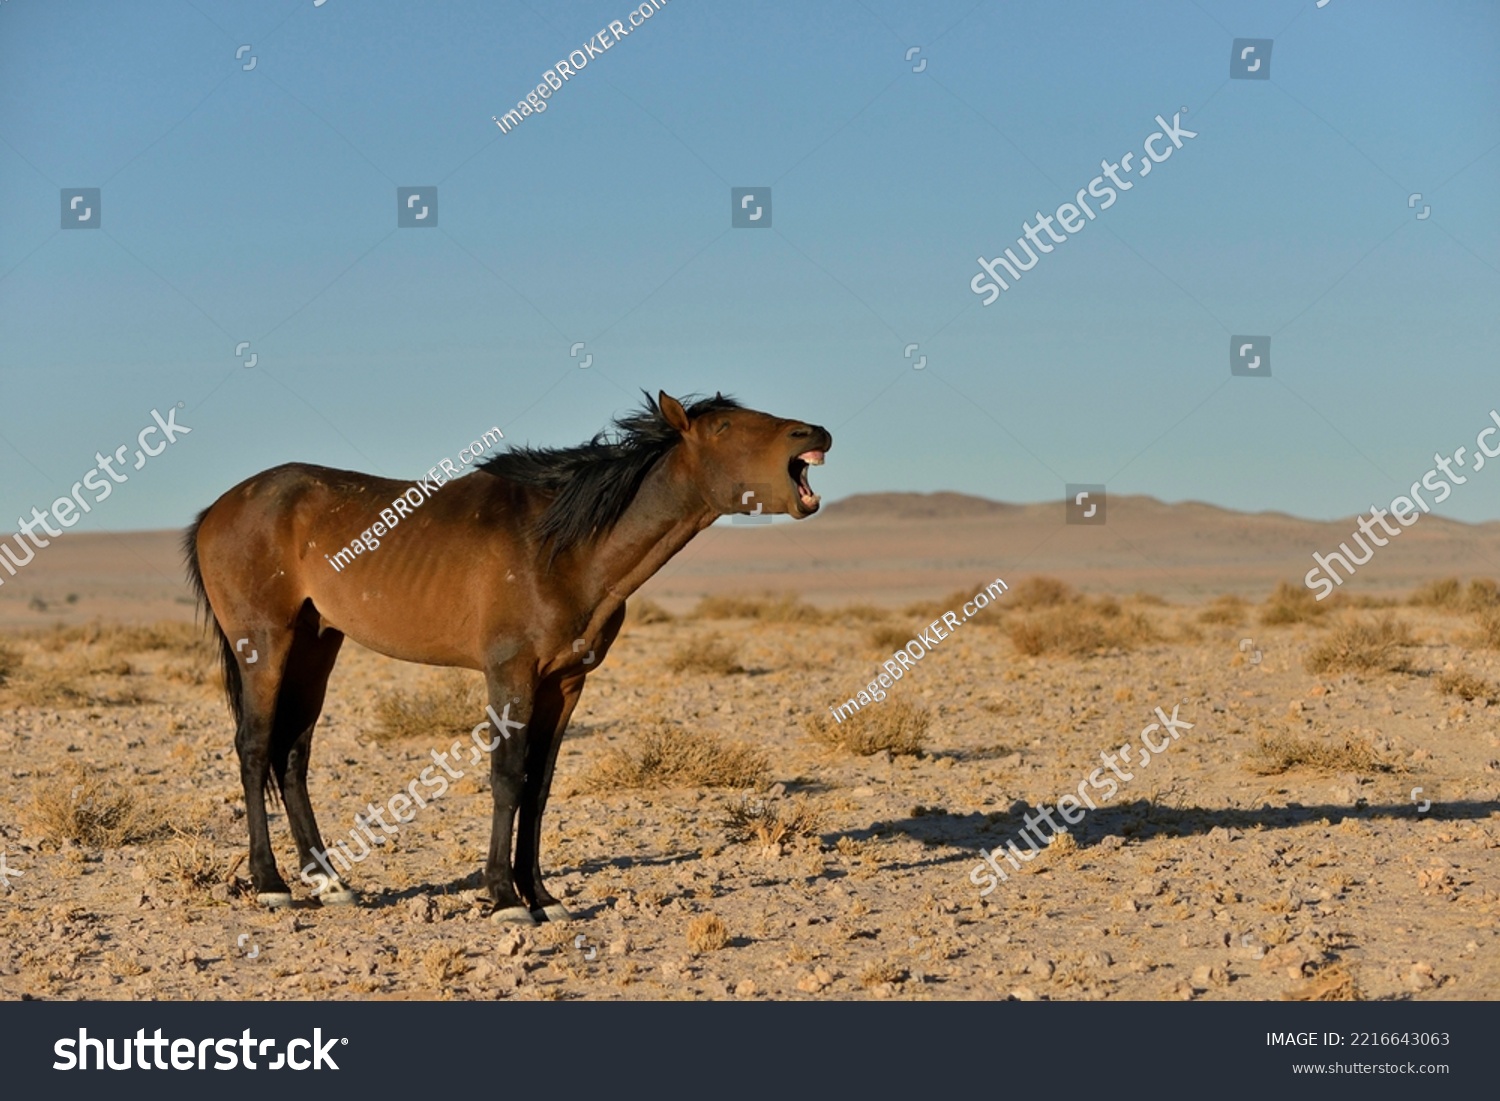 neighing desert horse, Namibian wild horse or Namib Desert horse (Equus ferus) near waterhole Garub, near Aus, Karas Region, Namibia #2216643063